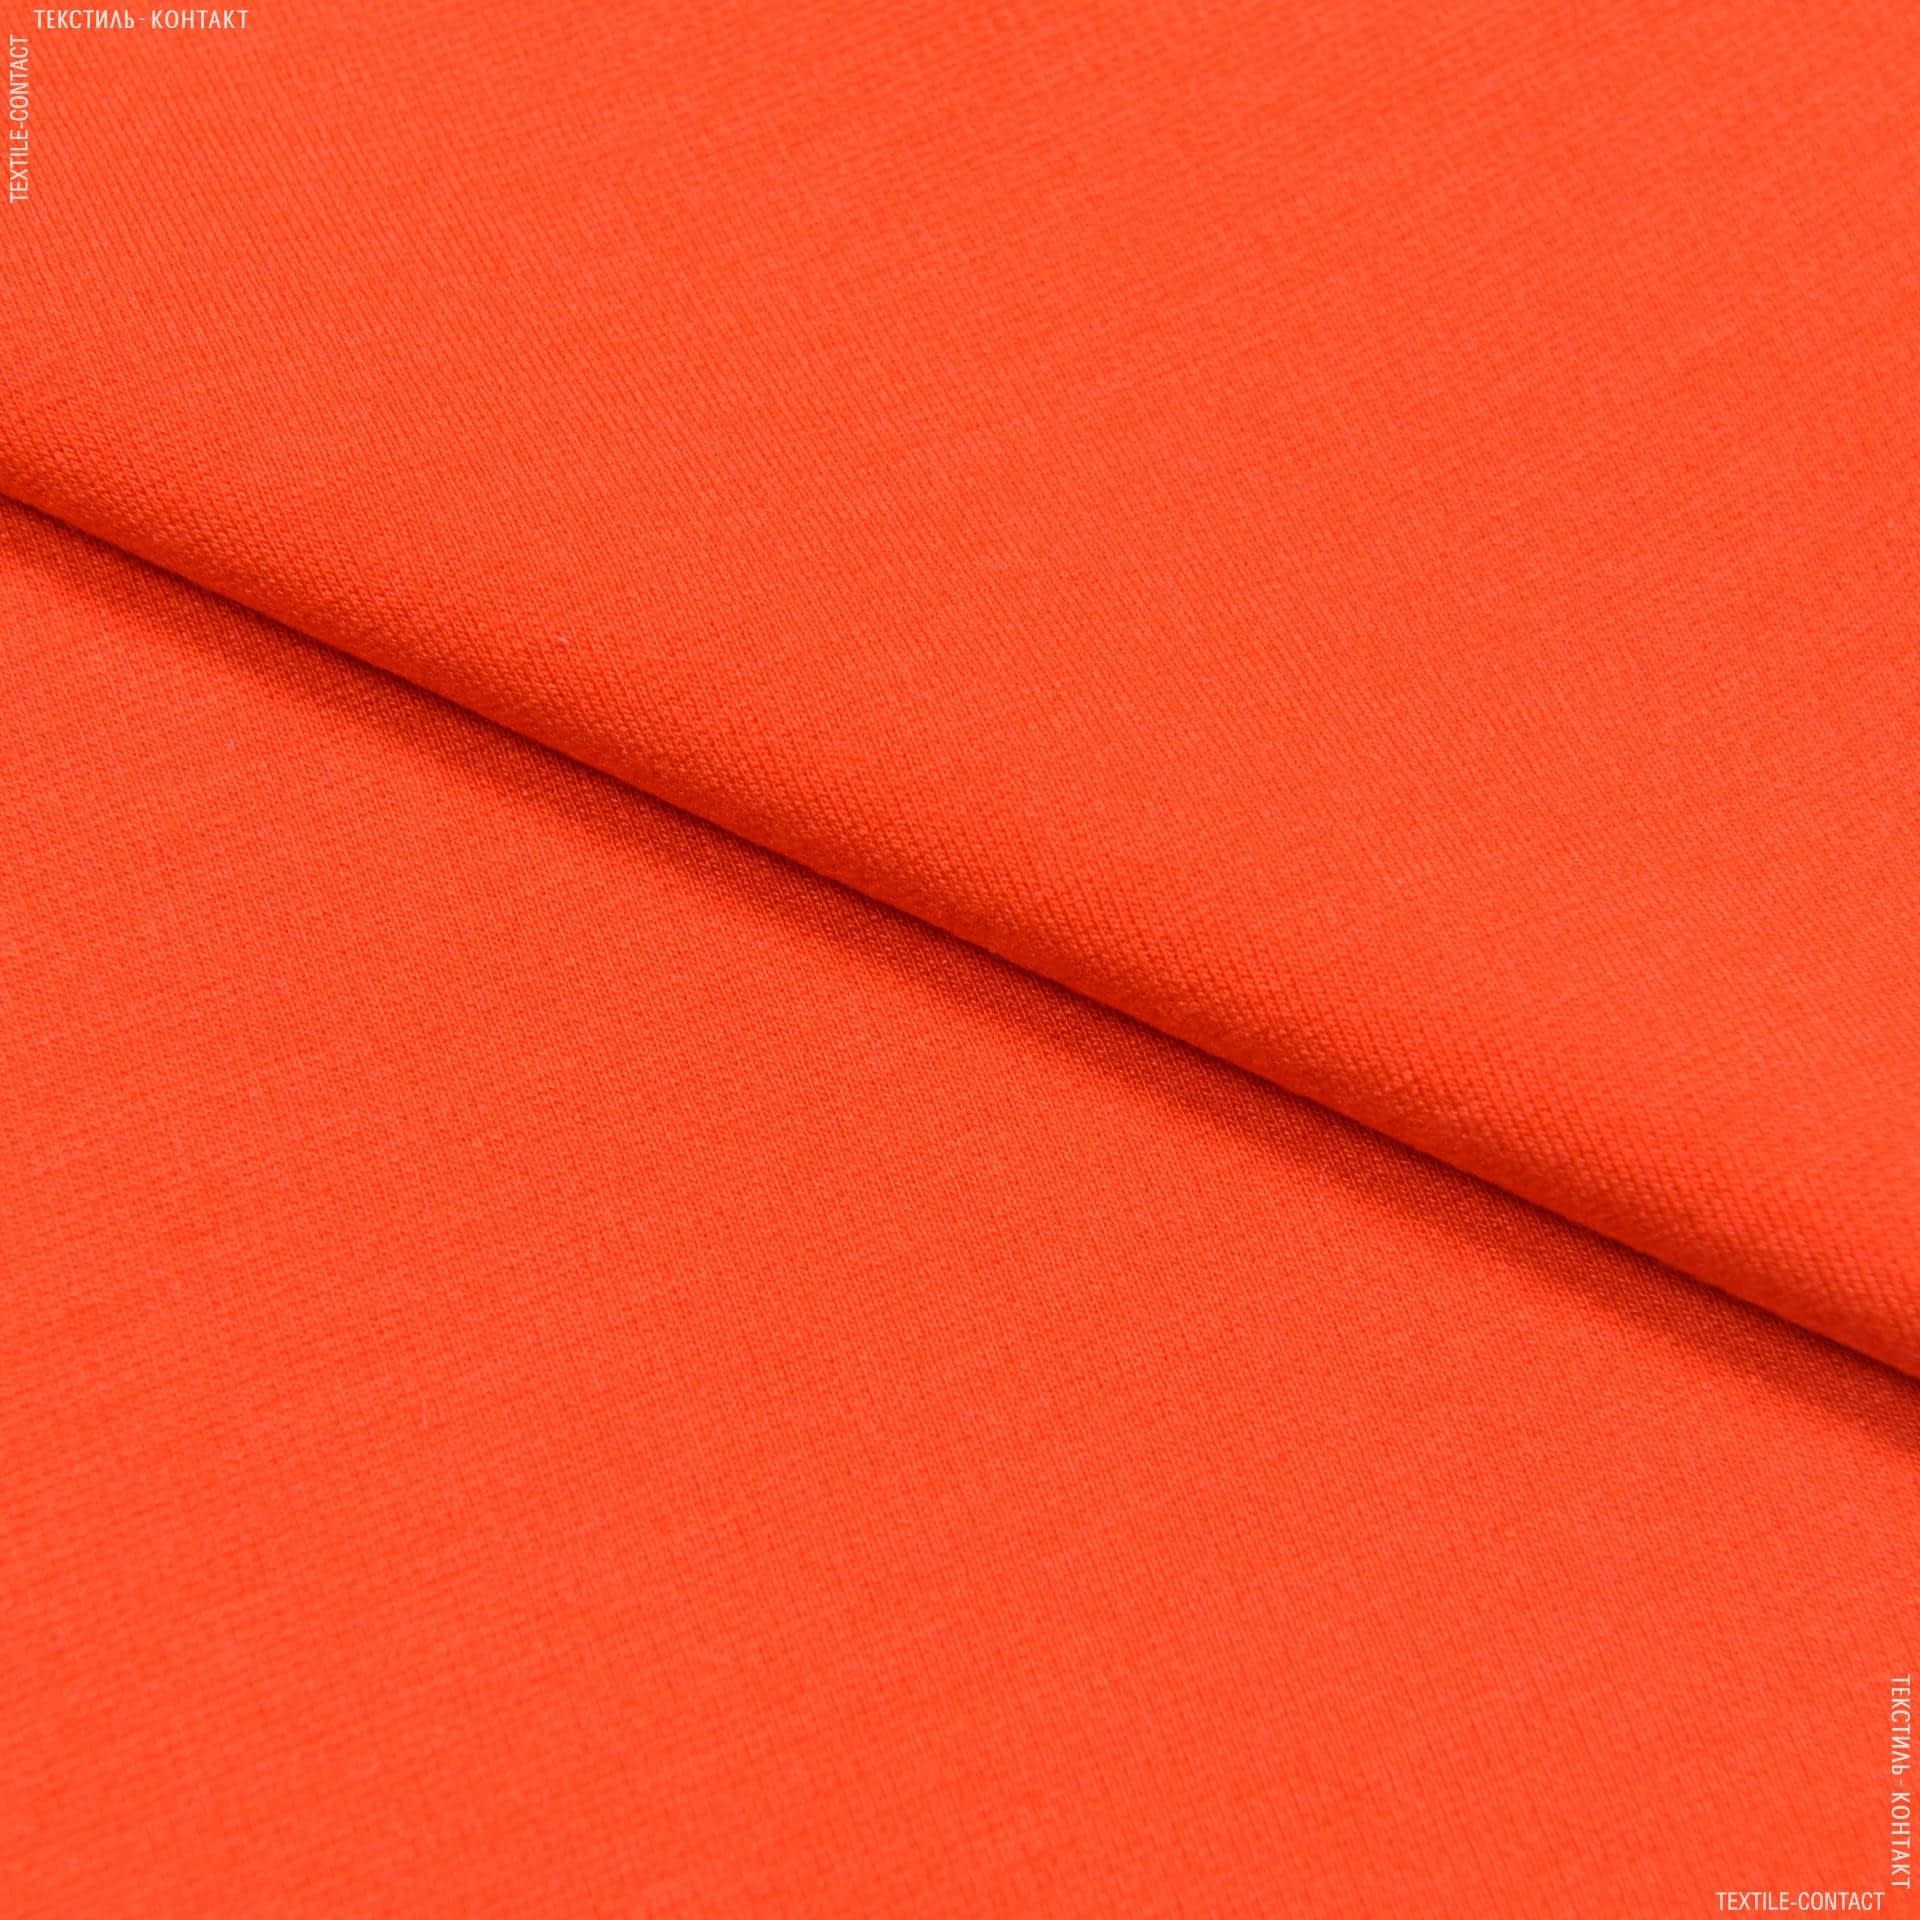 Ткани для костюмов - Трикотаж джерси лайт оранжевый